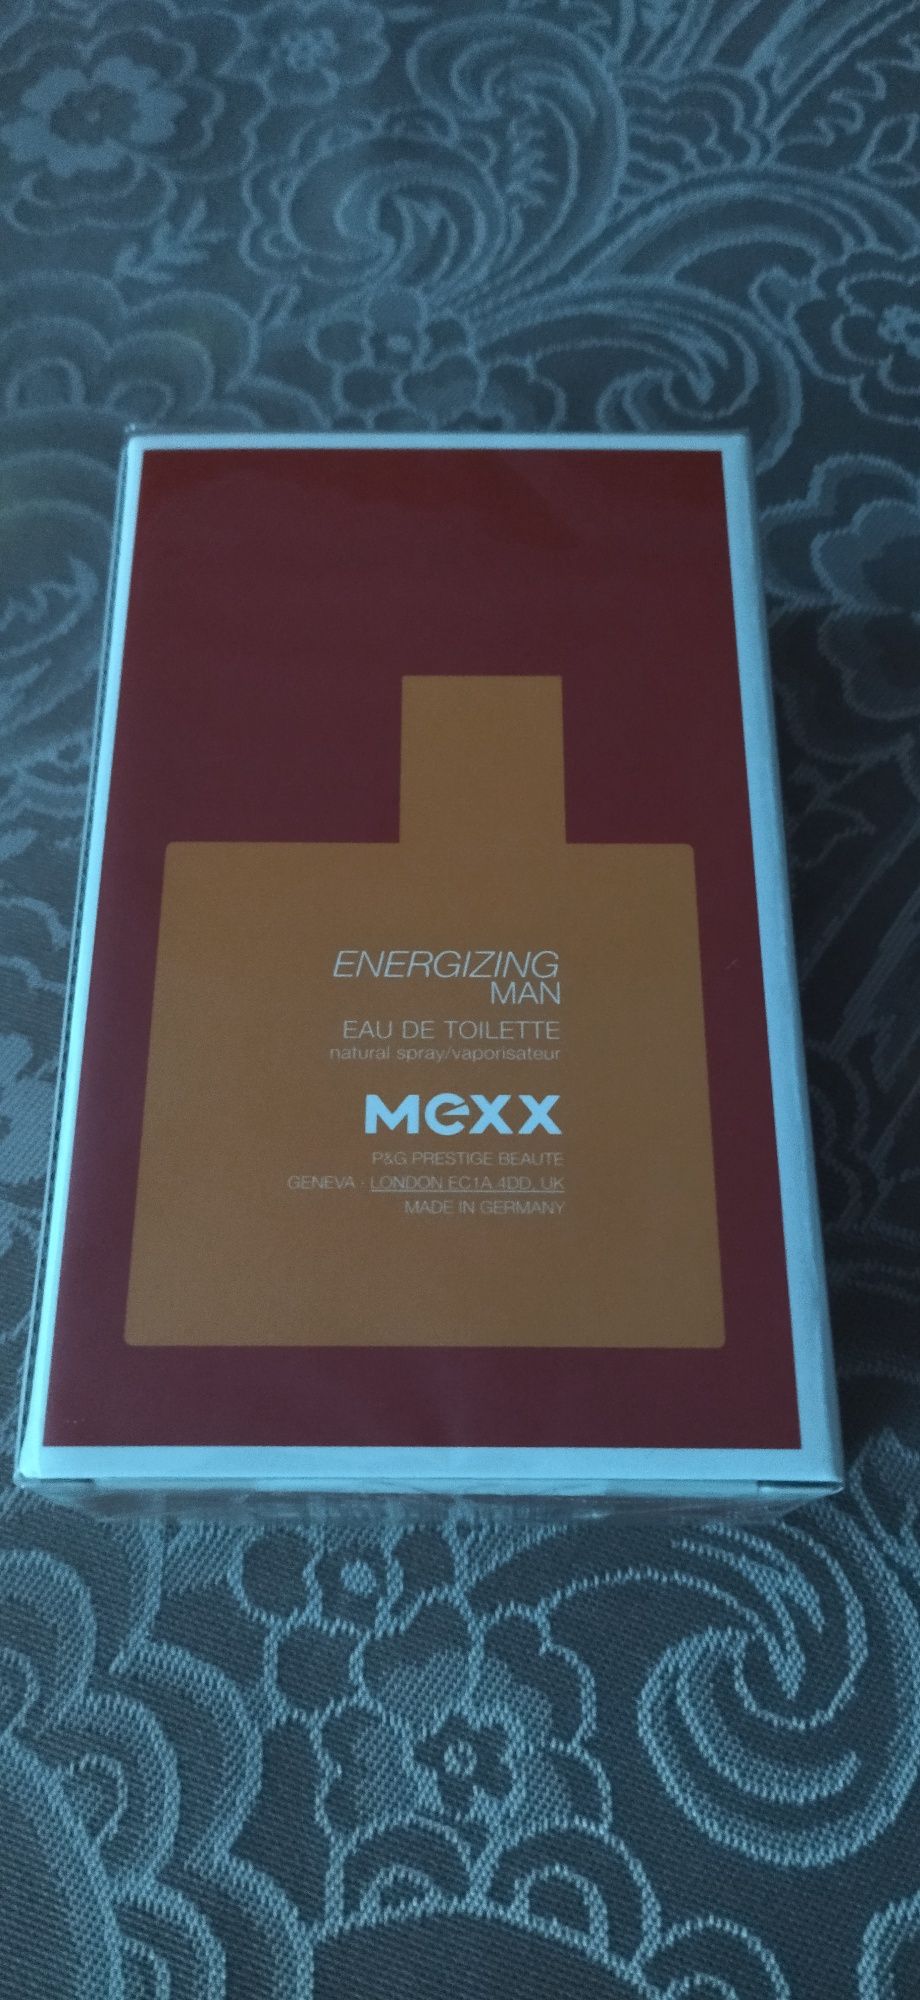 Mexx energizing man 50 ml zafoliowane, oryginalne
Mexx energizing man